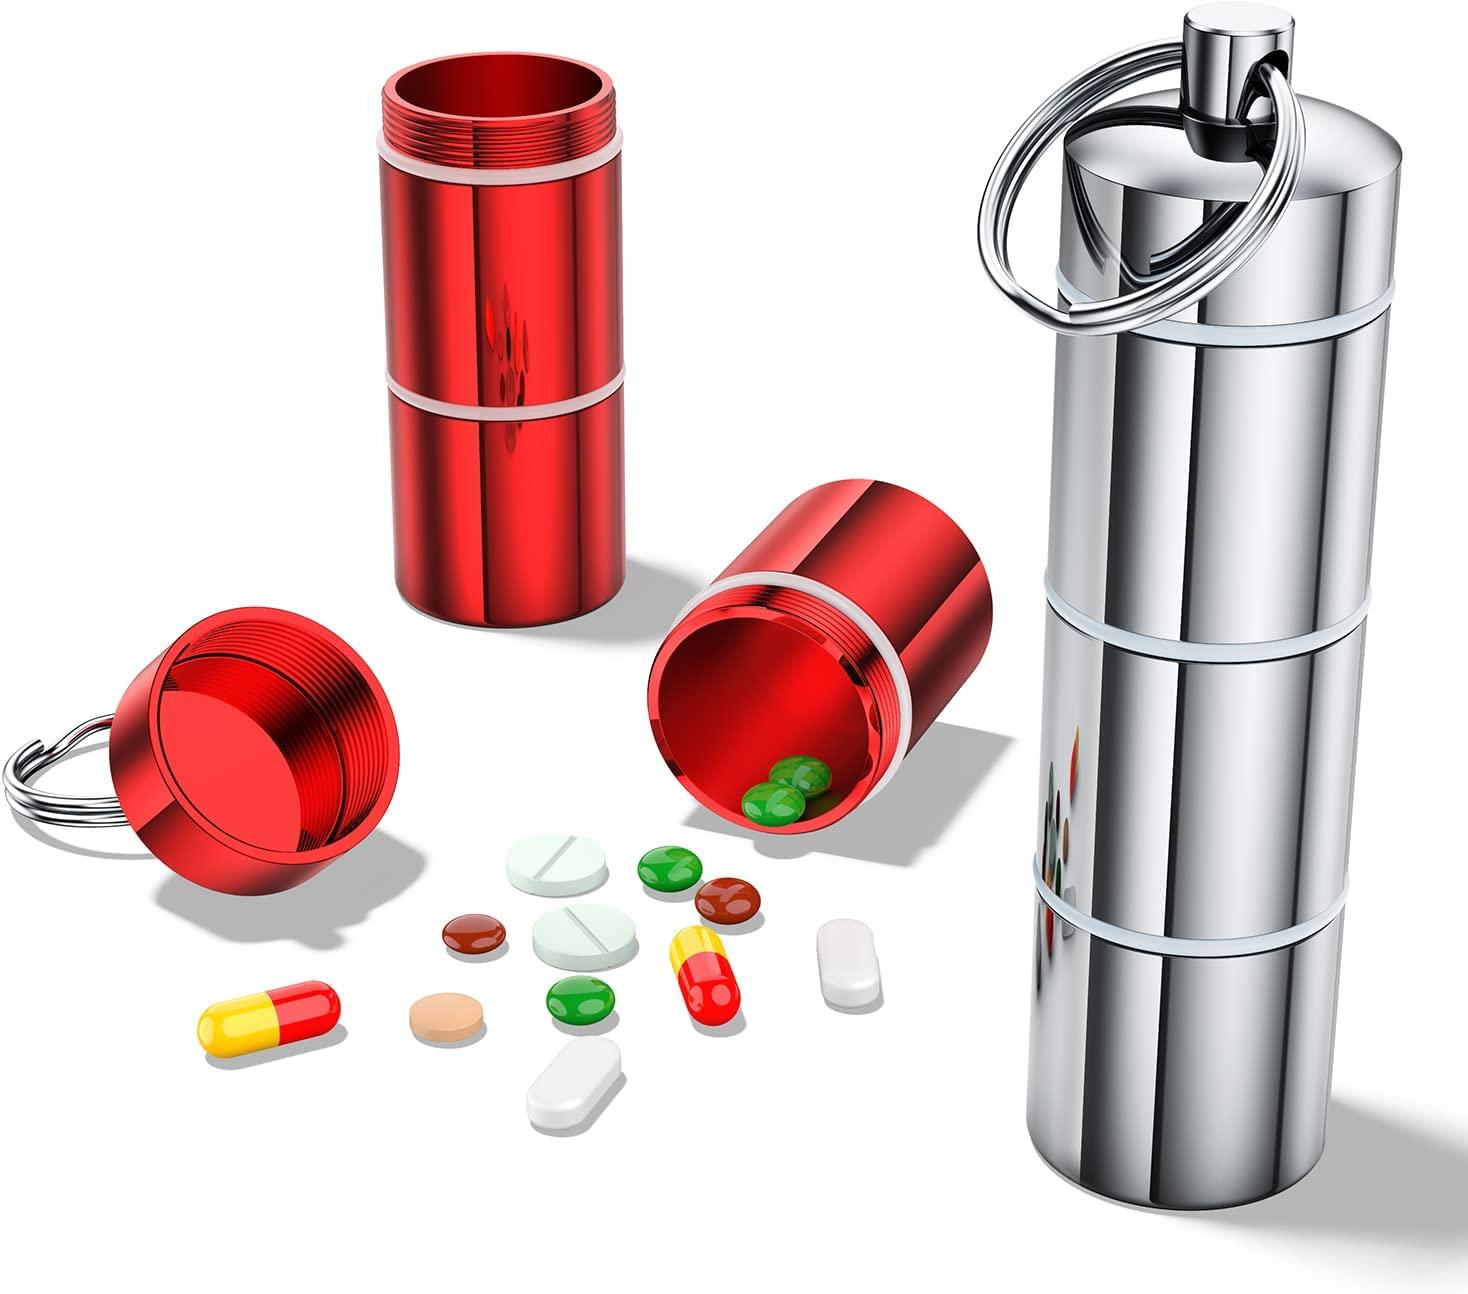 HANNEA® 3PCS Aluminum Keychain Medication Pill Box, Waterproof Mini Metal  Pill Holder Medicine Bottle for Outdoor, Travel, Camping